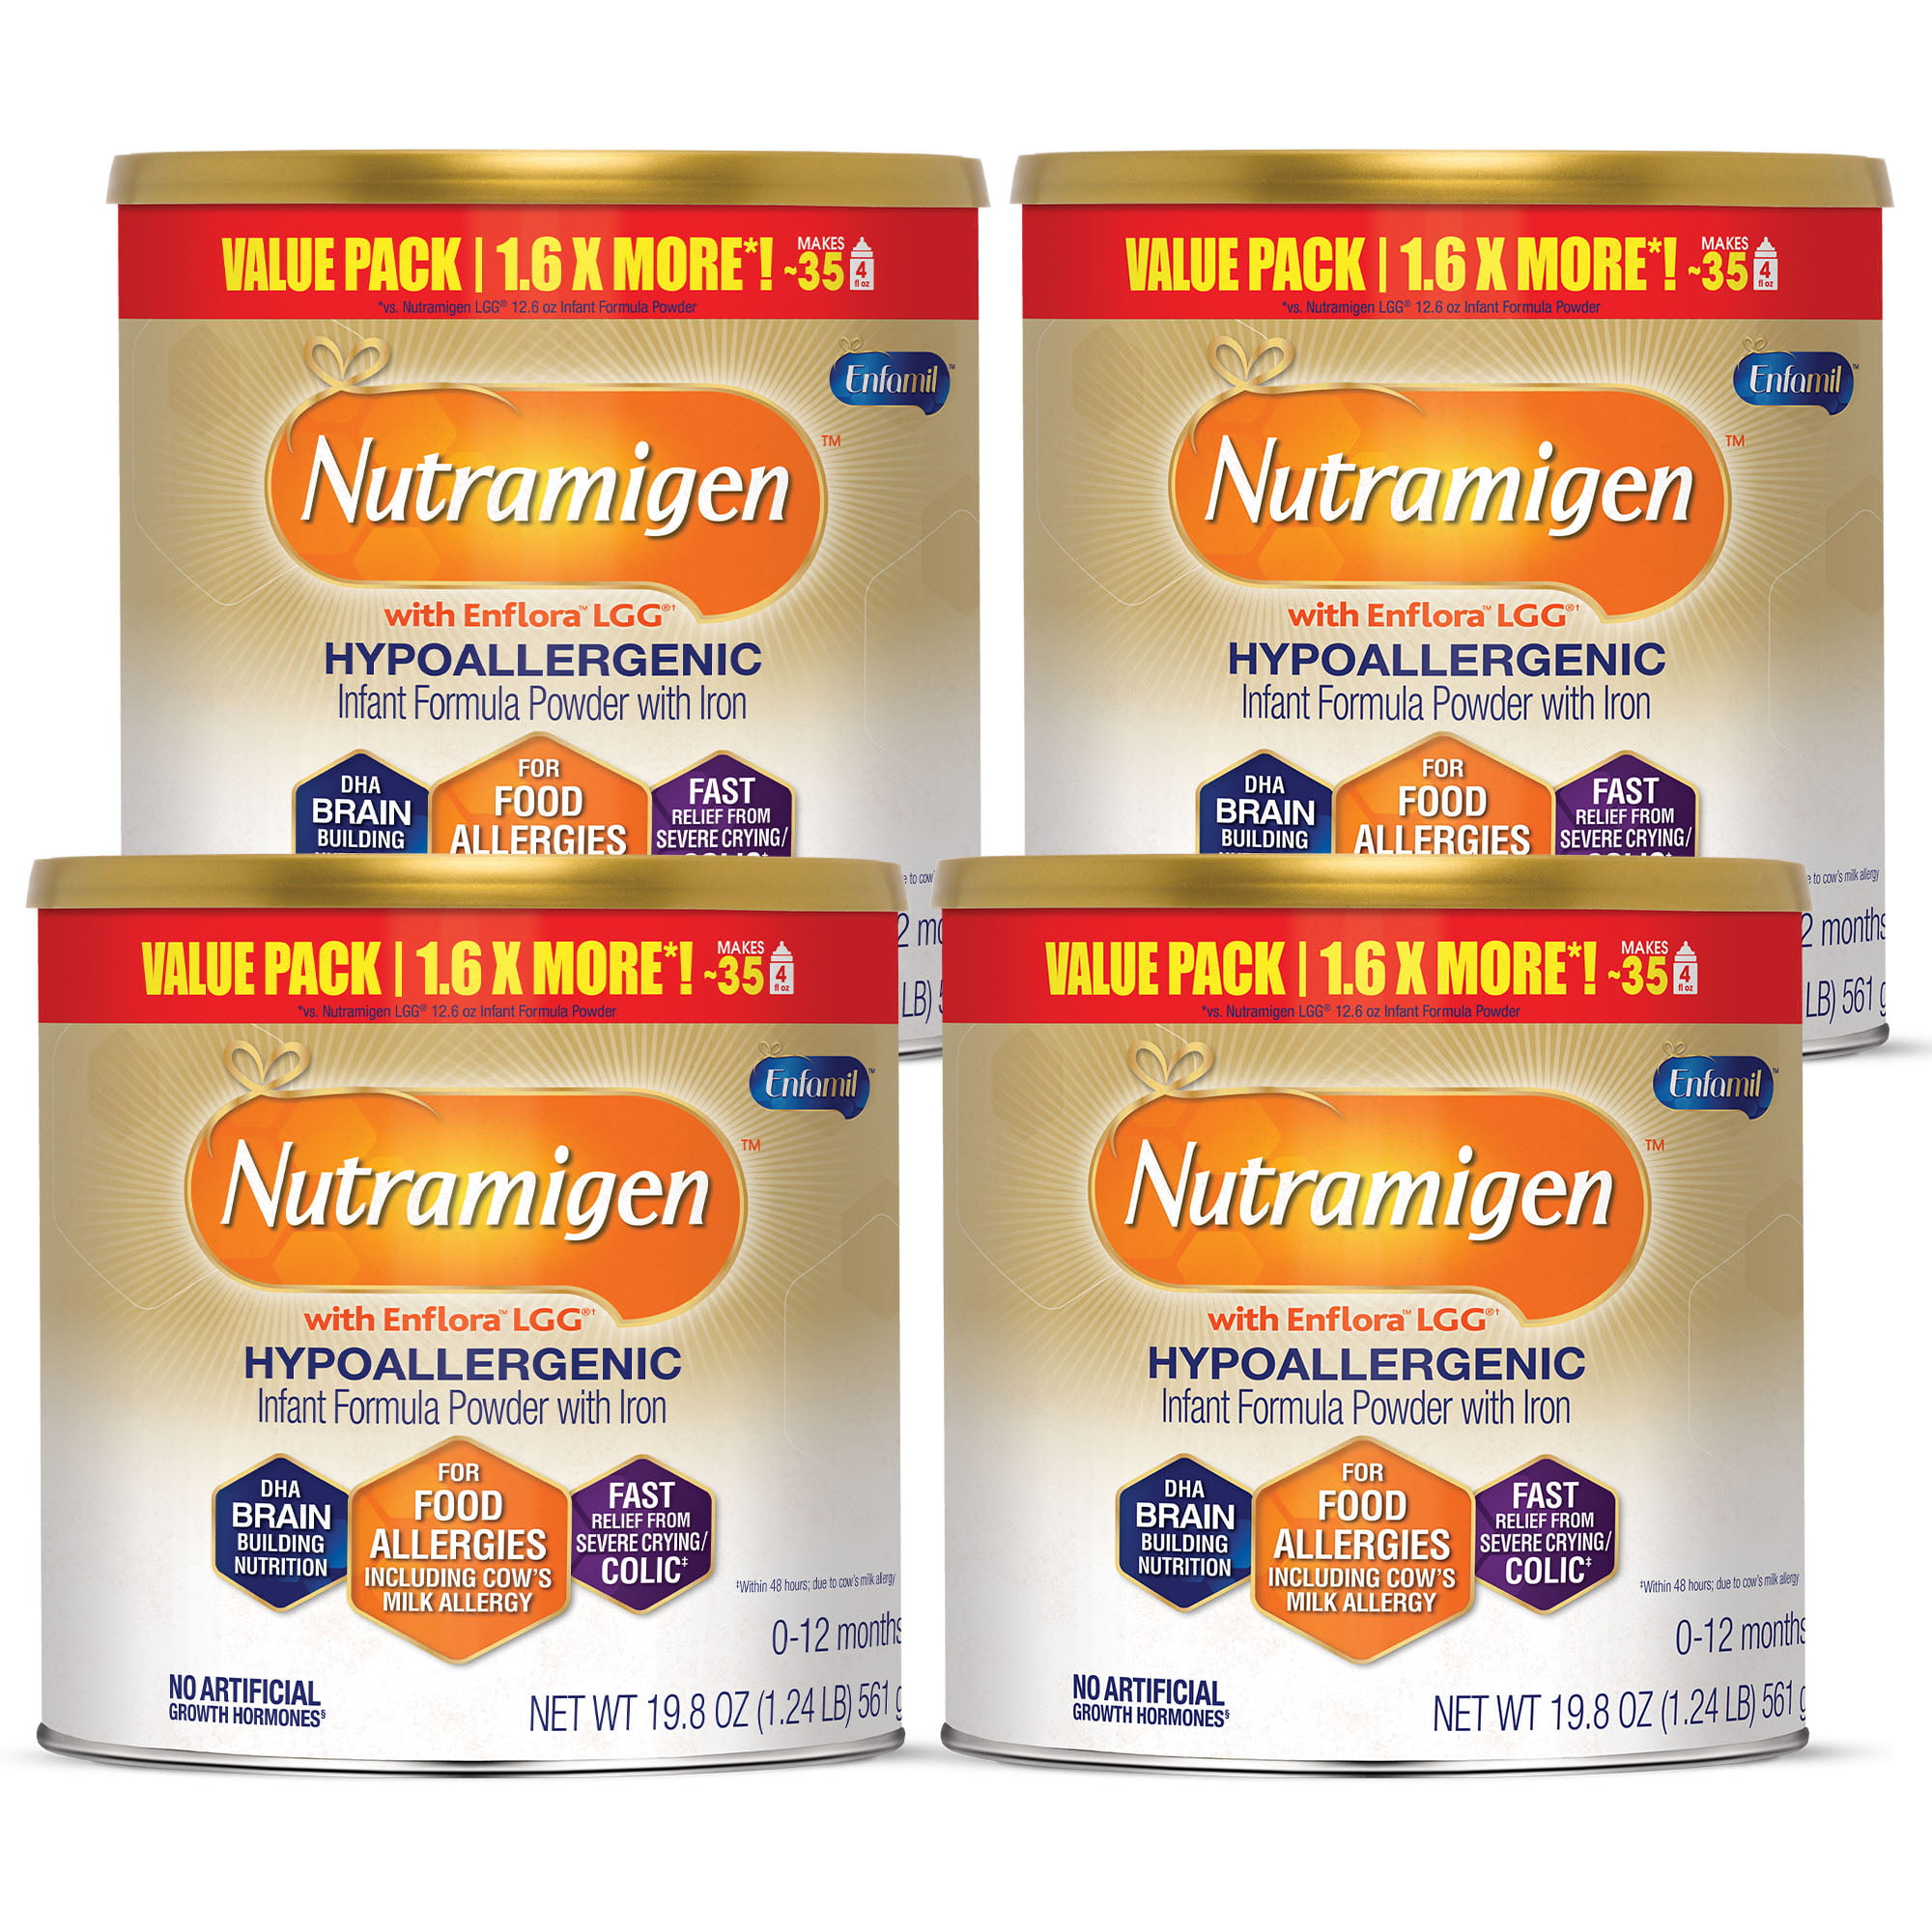 nutramigen 8 oz powder can price